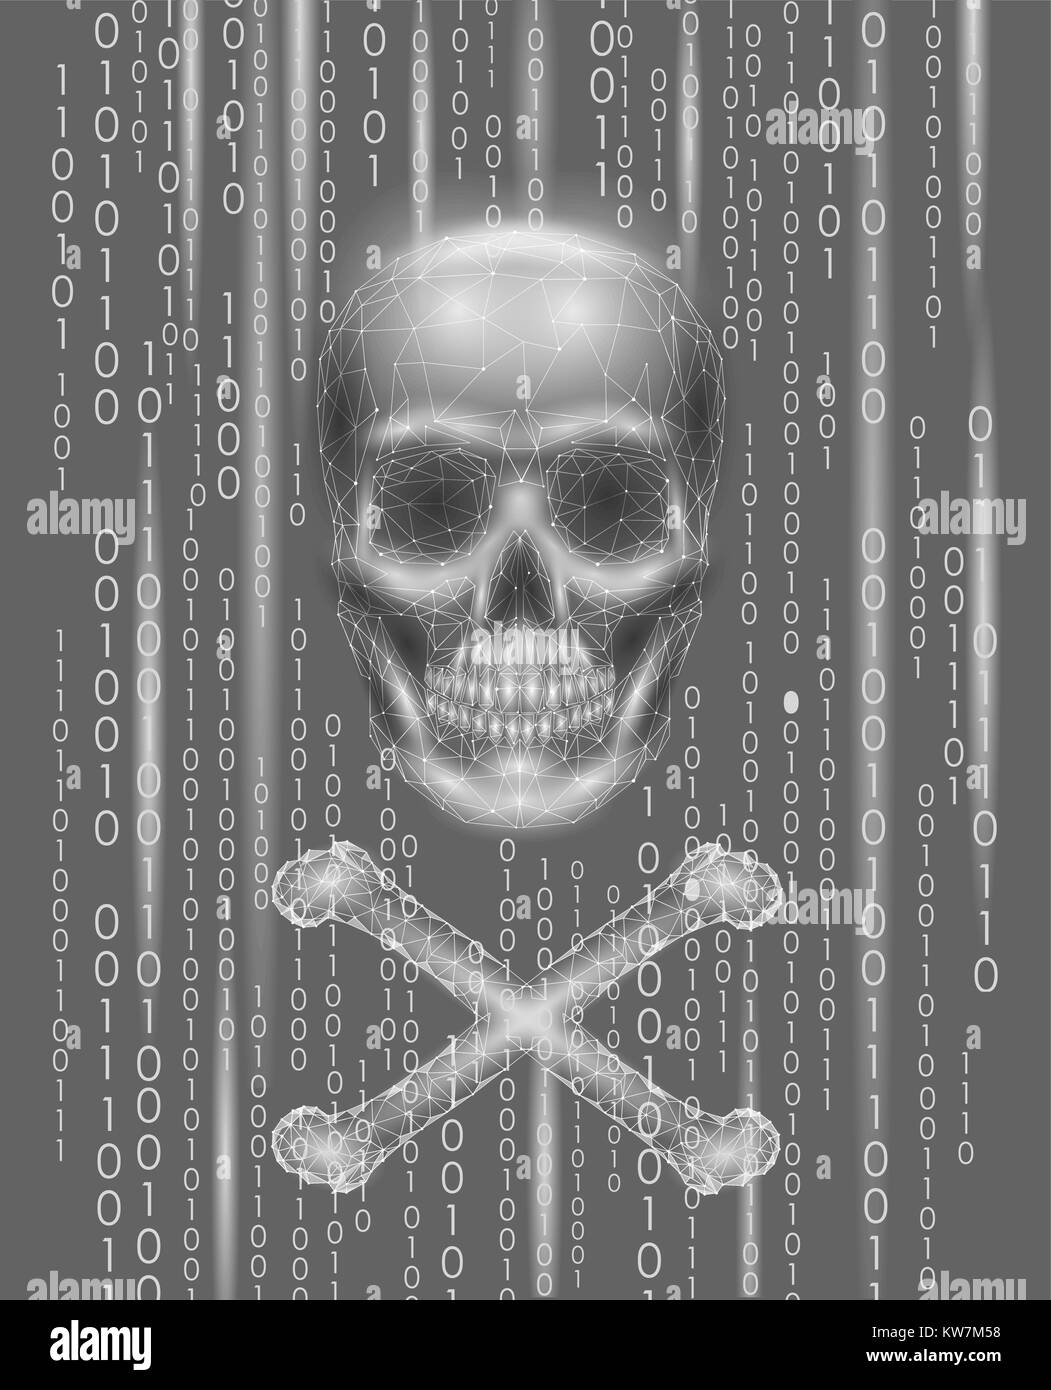 Jolly Roger Schädel binären Code Nummern. Hacker piraterie Computer online Angriff warnen. Beängstigend Warnung hacking Sicherheit Datenschutz. Low Poly polygonalen Tria Stock Vektor